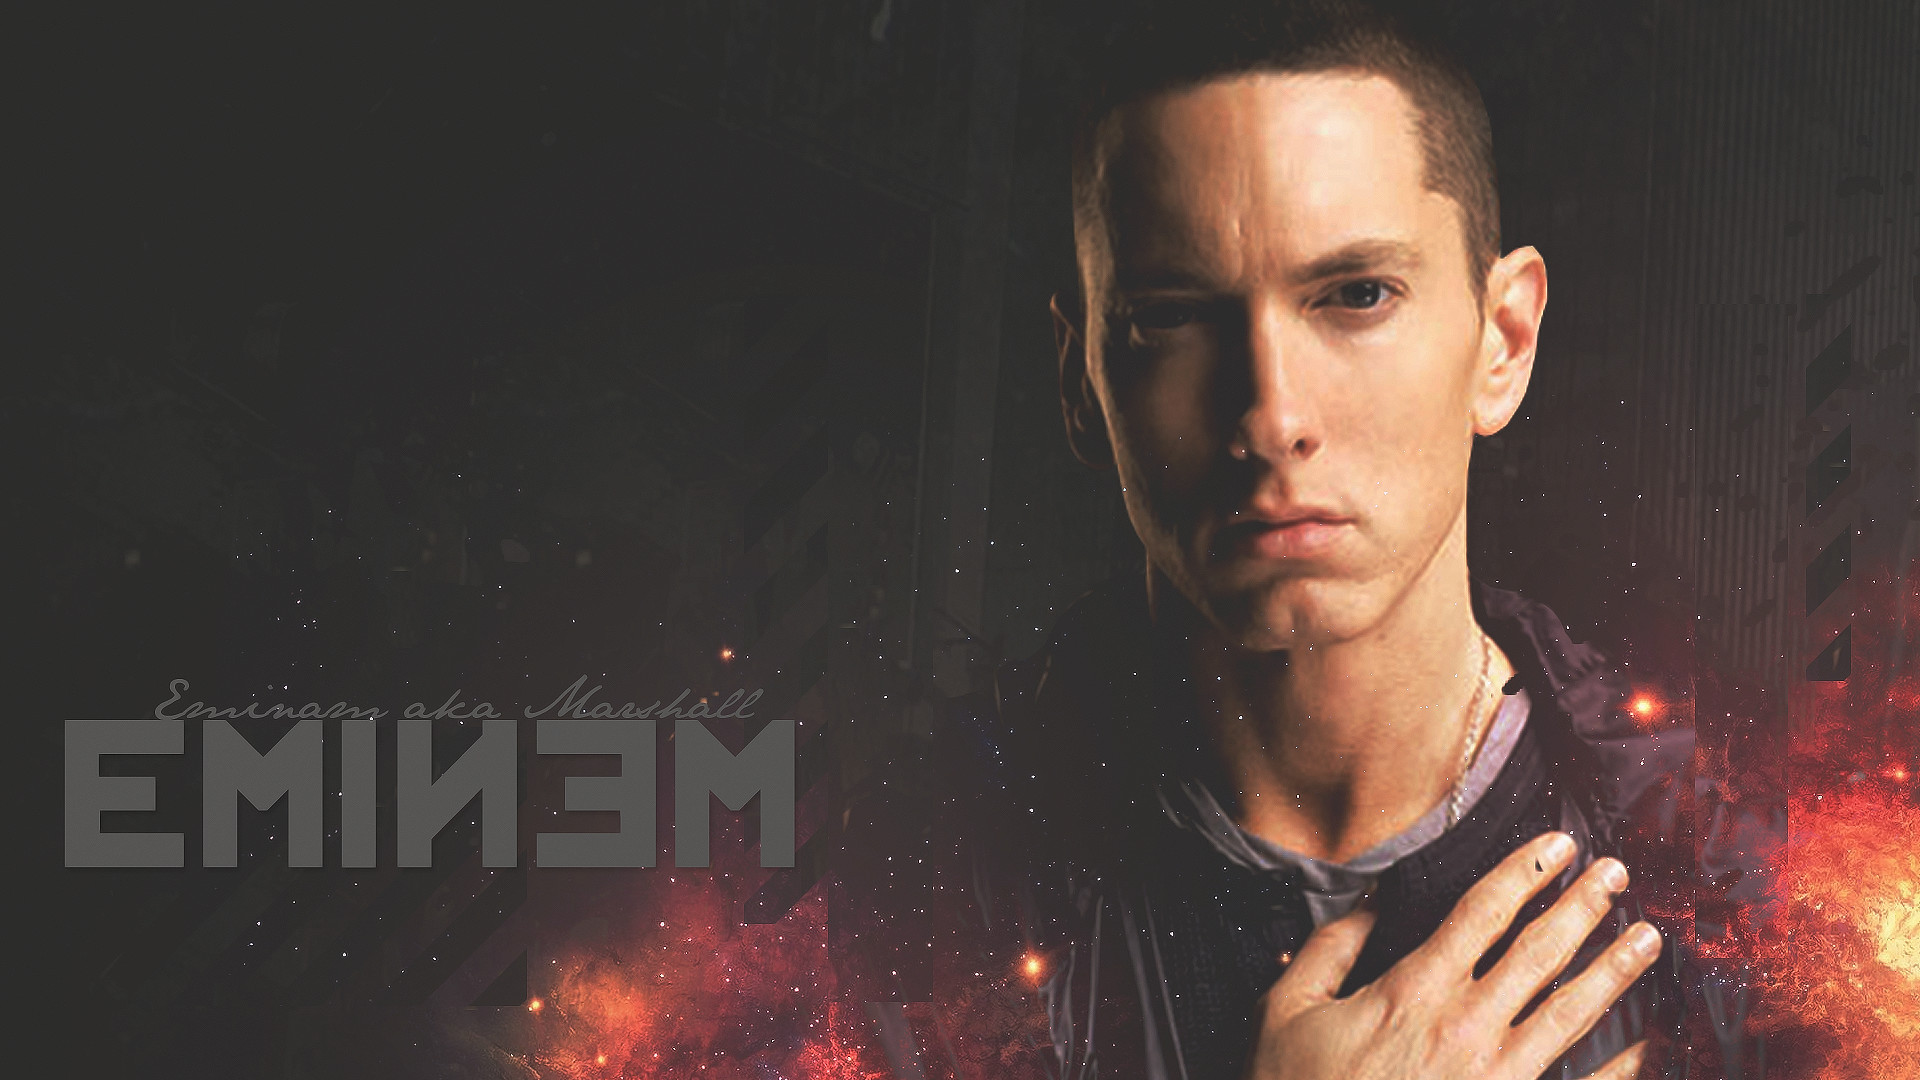 1920x1080 Eminem Backgrounds - WallpaperSafari